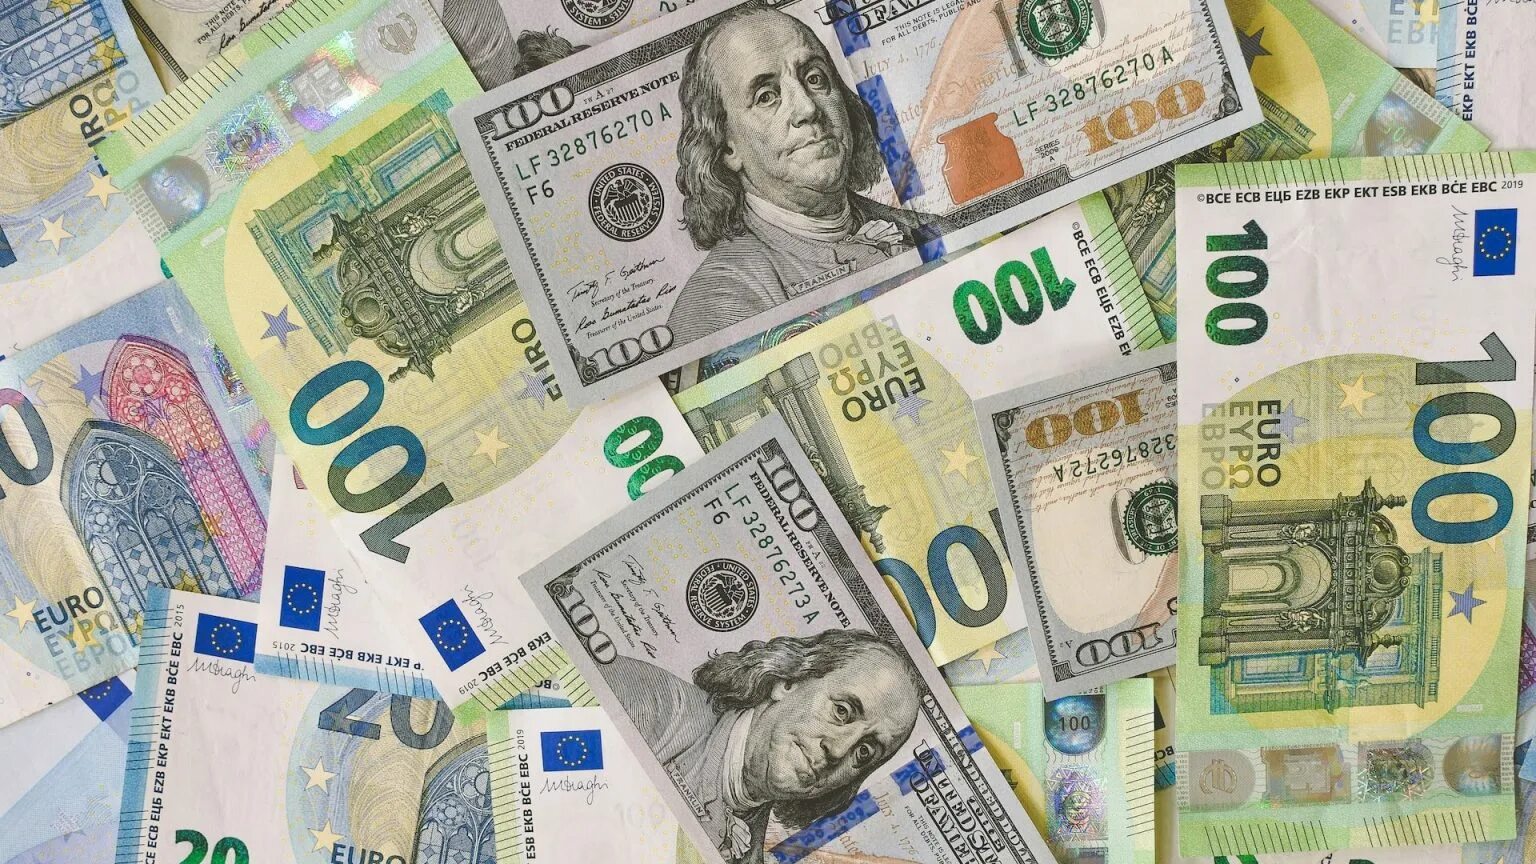 Купюры евро и доллара. Доллар евро фунт. Доллар (валюта). Доллары и евро картинки.